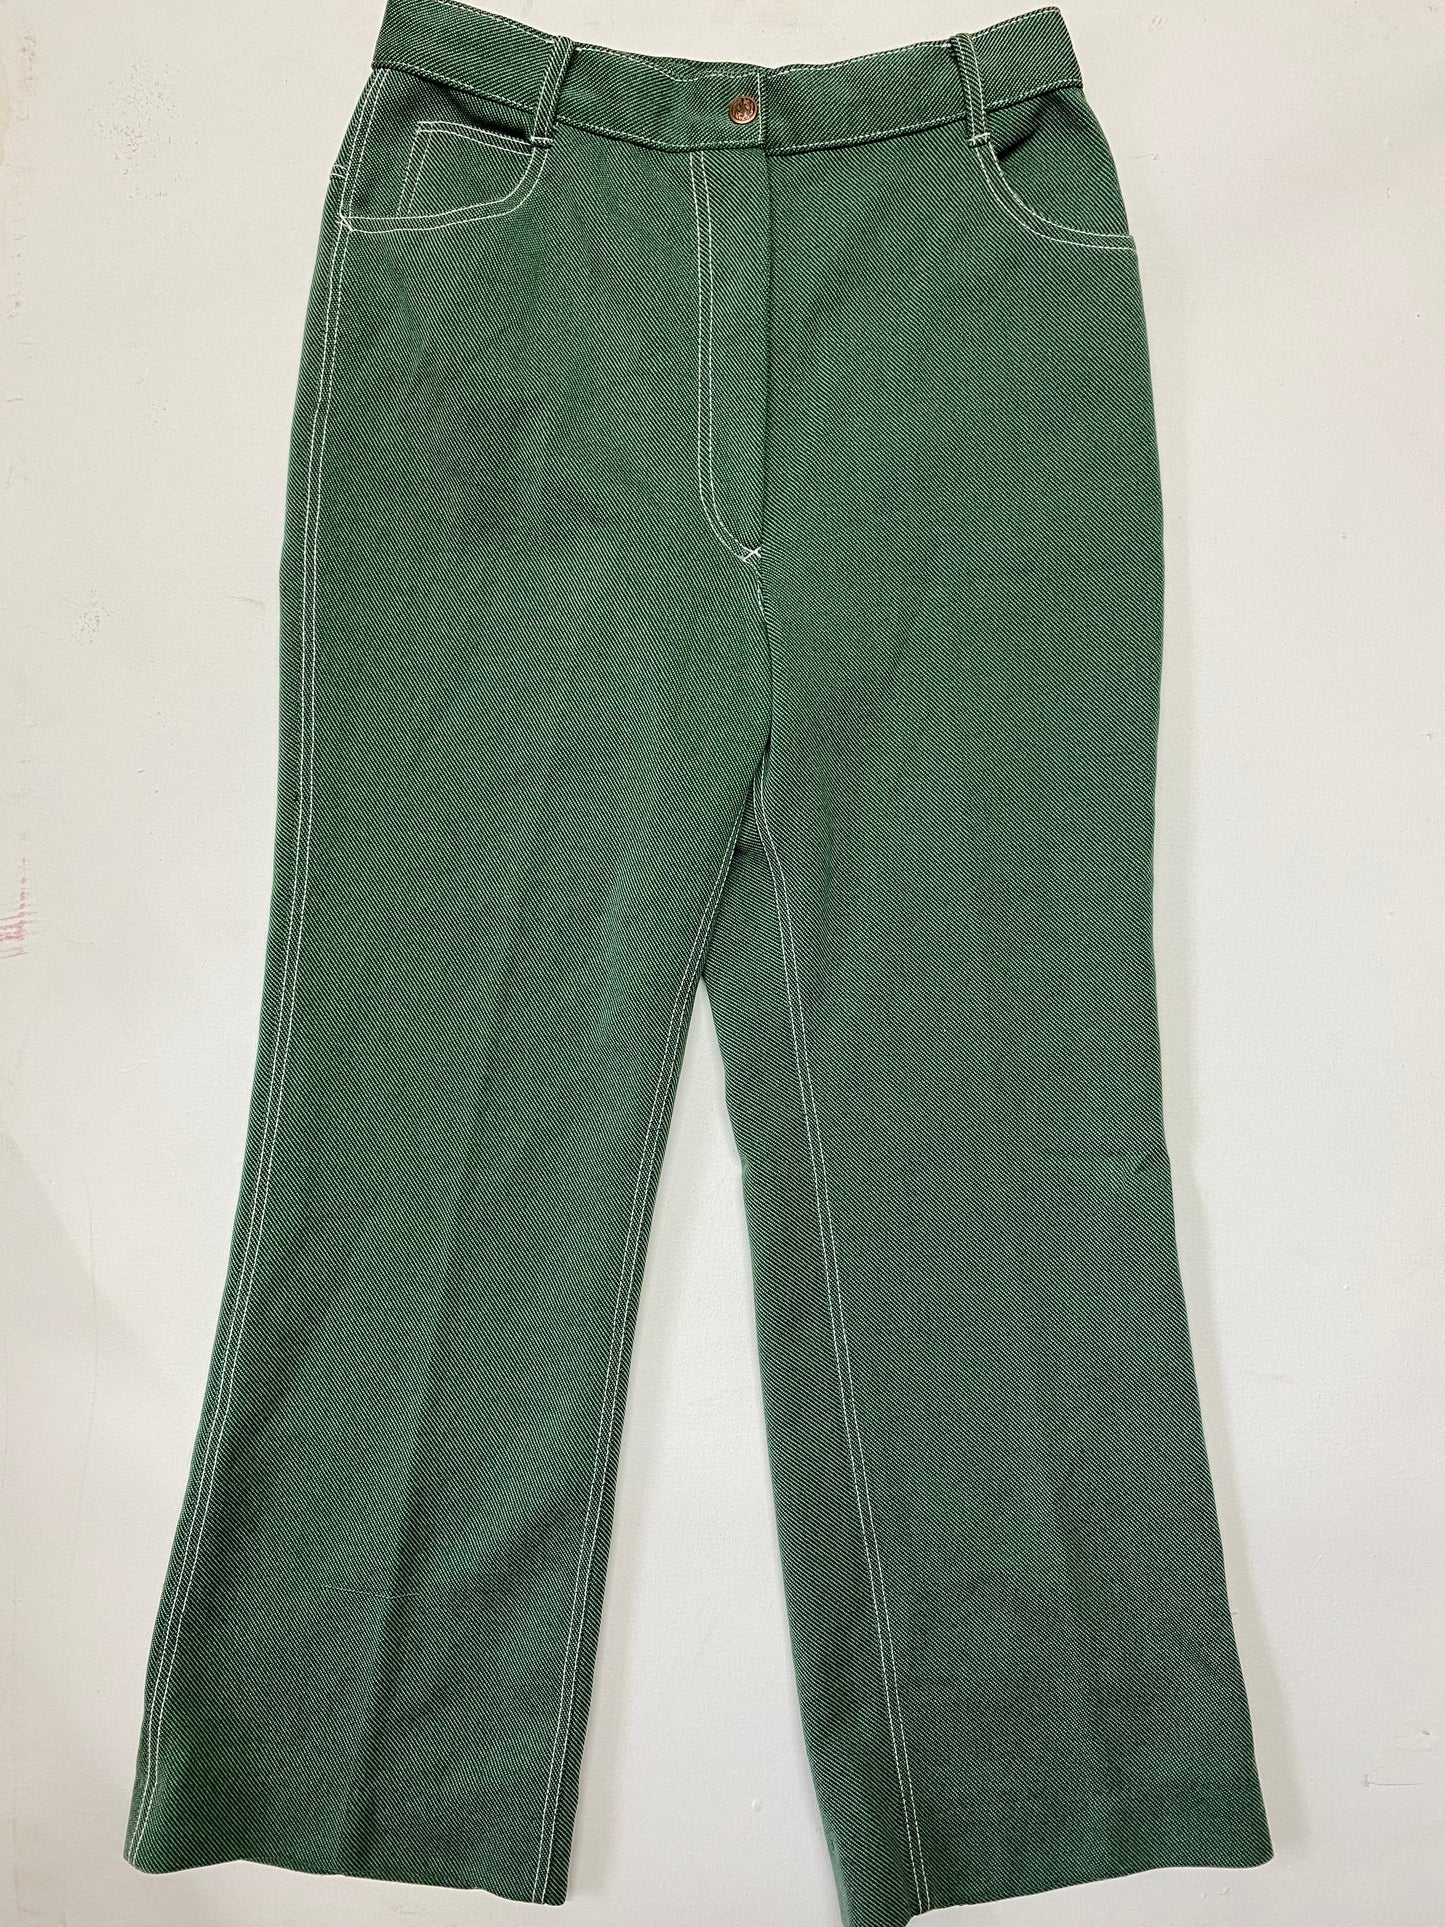 Sears Green Straight Leg Pants Size 14